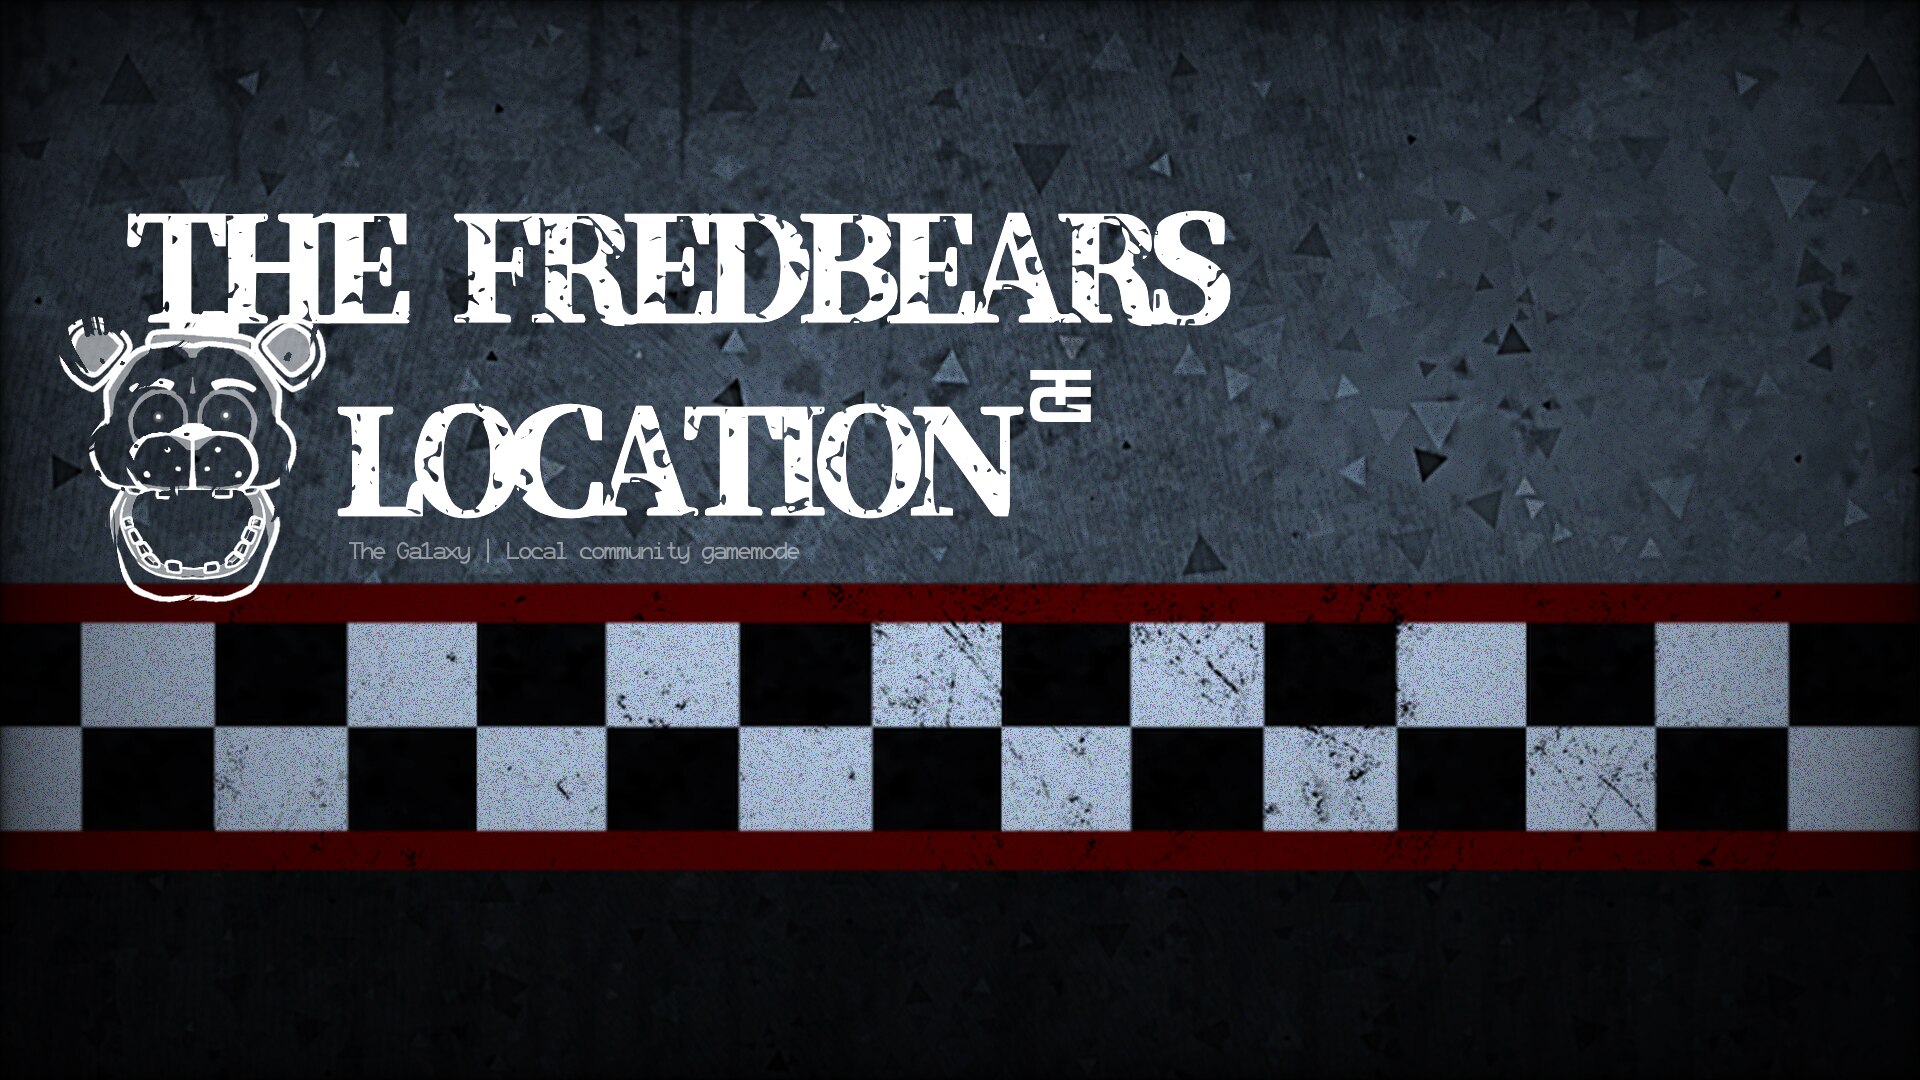 Of course fredbear will be the cover, fredbear fnaf 4